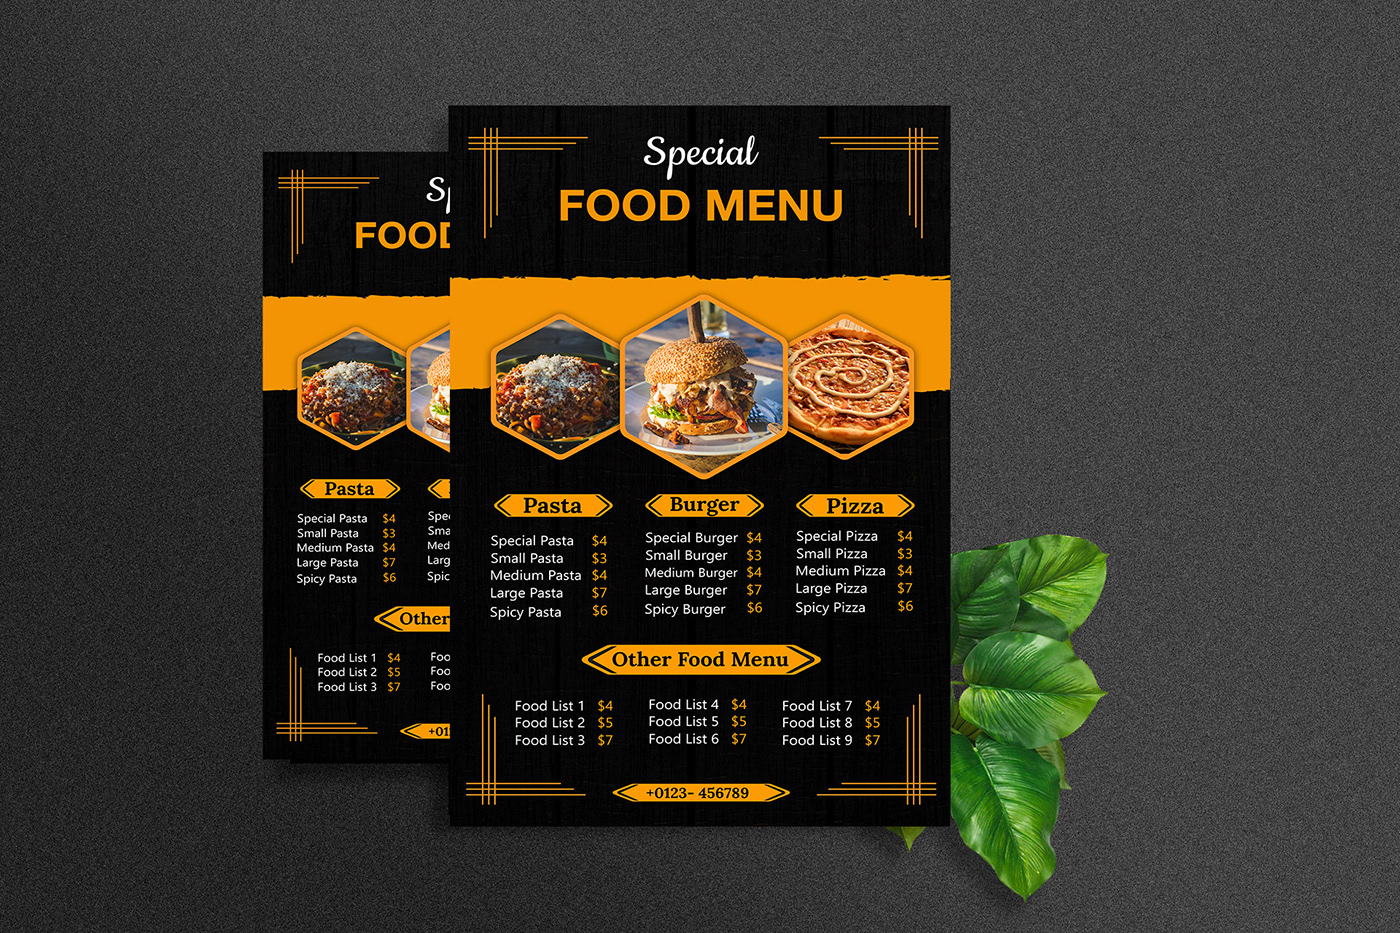 Flyer Design flyers posters Mockup restaurant menu Food  spicy food Fast food burger